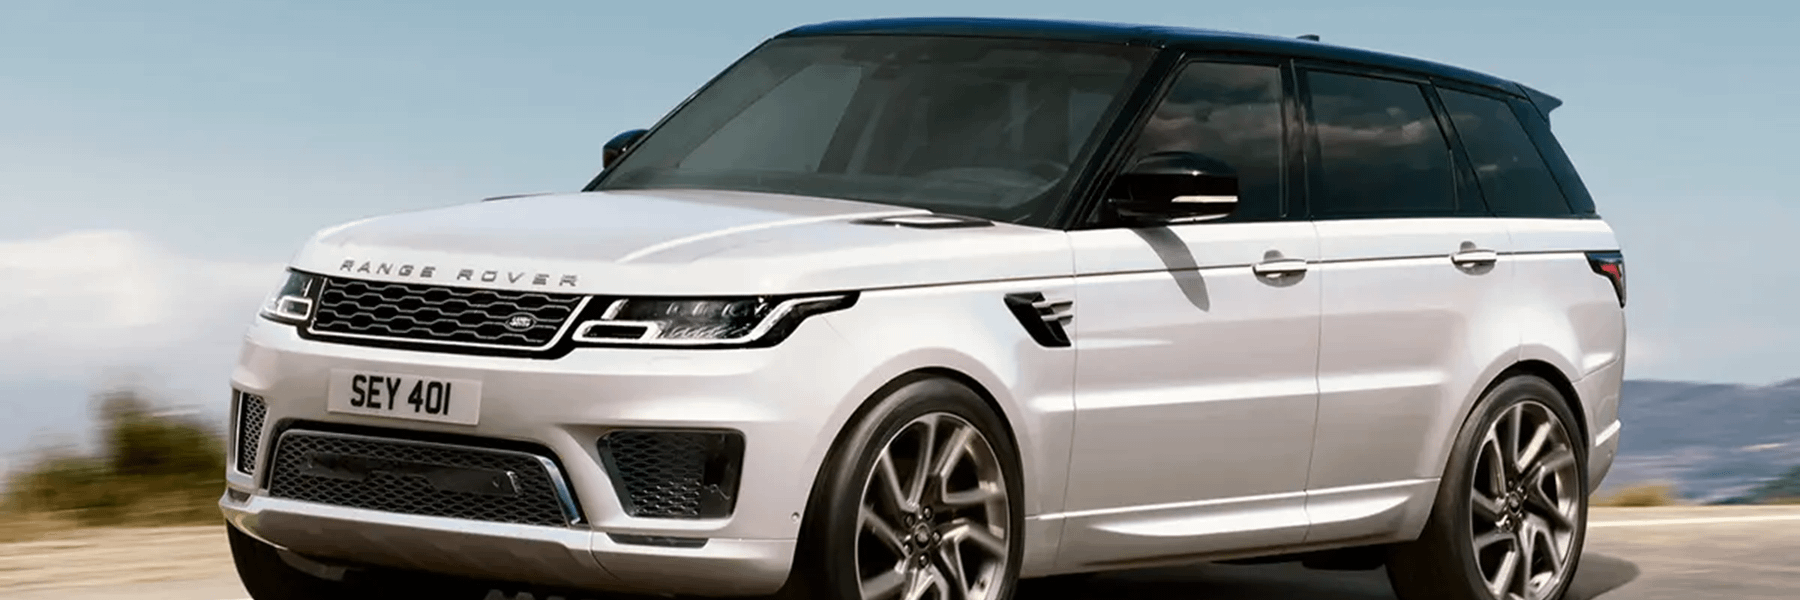 Does Land Rover Make an Electric Car? Sinclair Land Rover